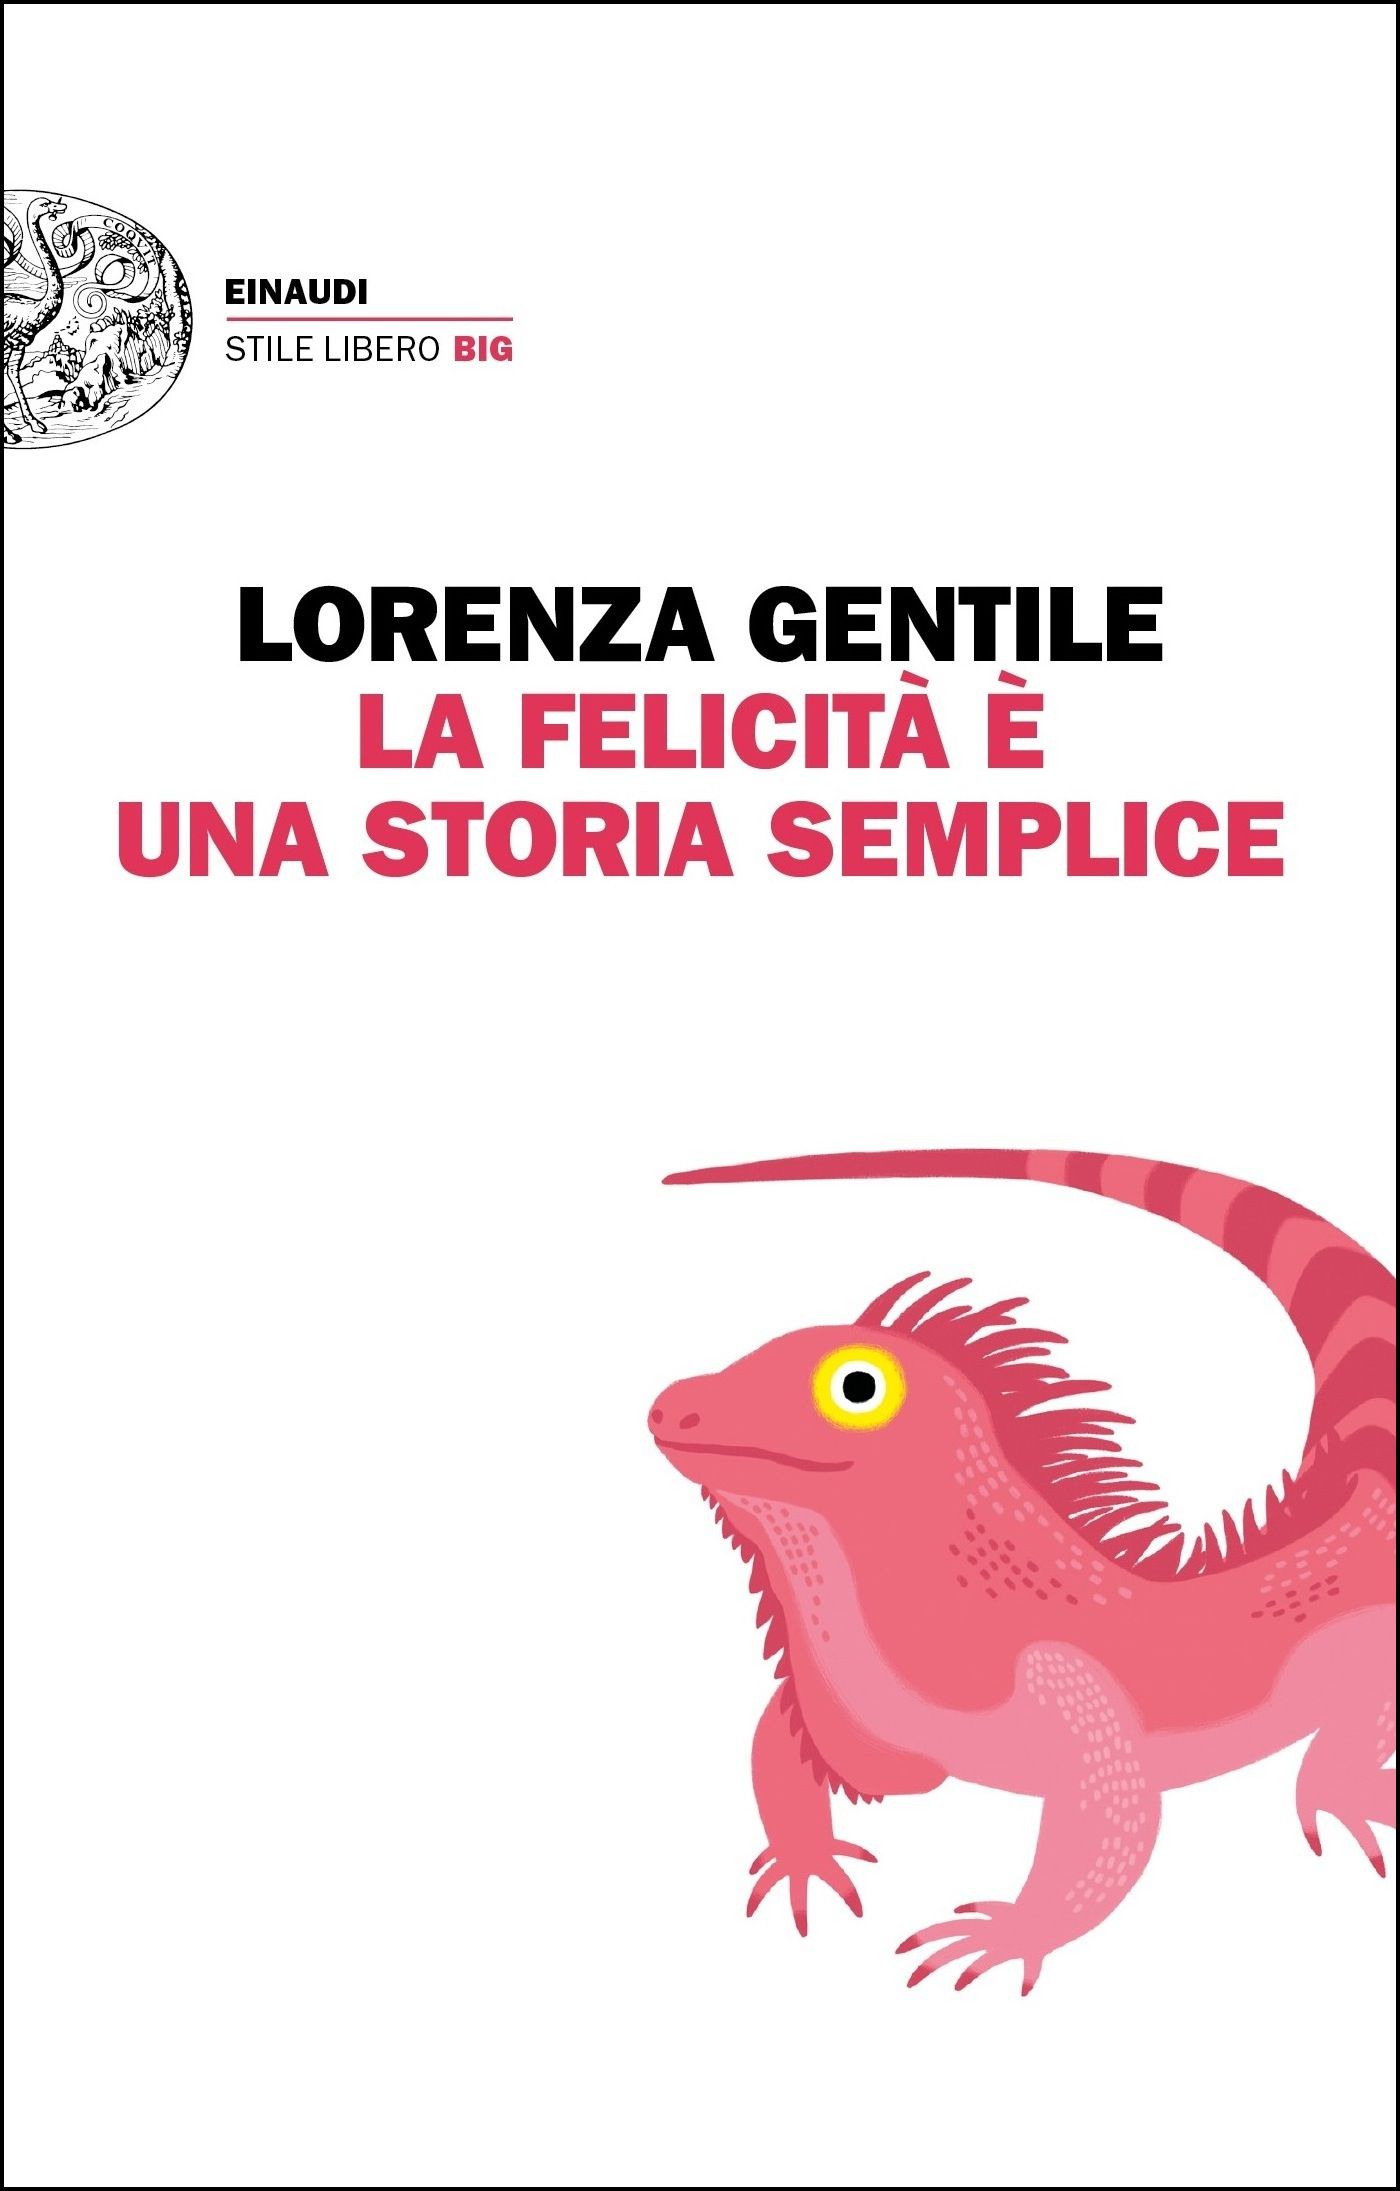 La felicità è una storia semplice - Lorenza Gentile (Einaudi) 